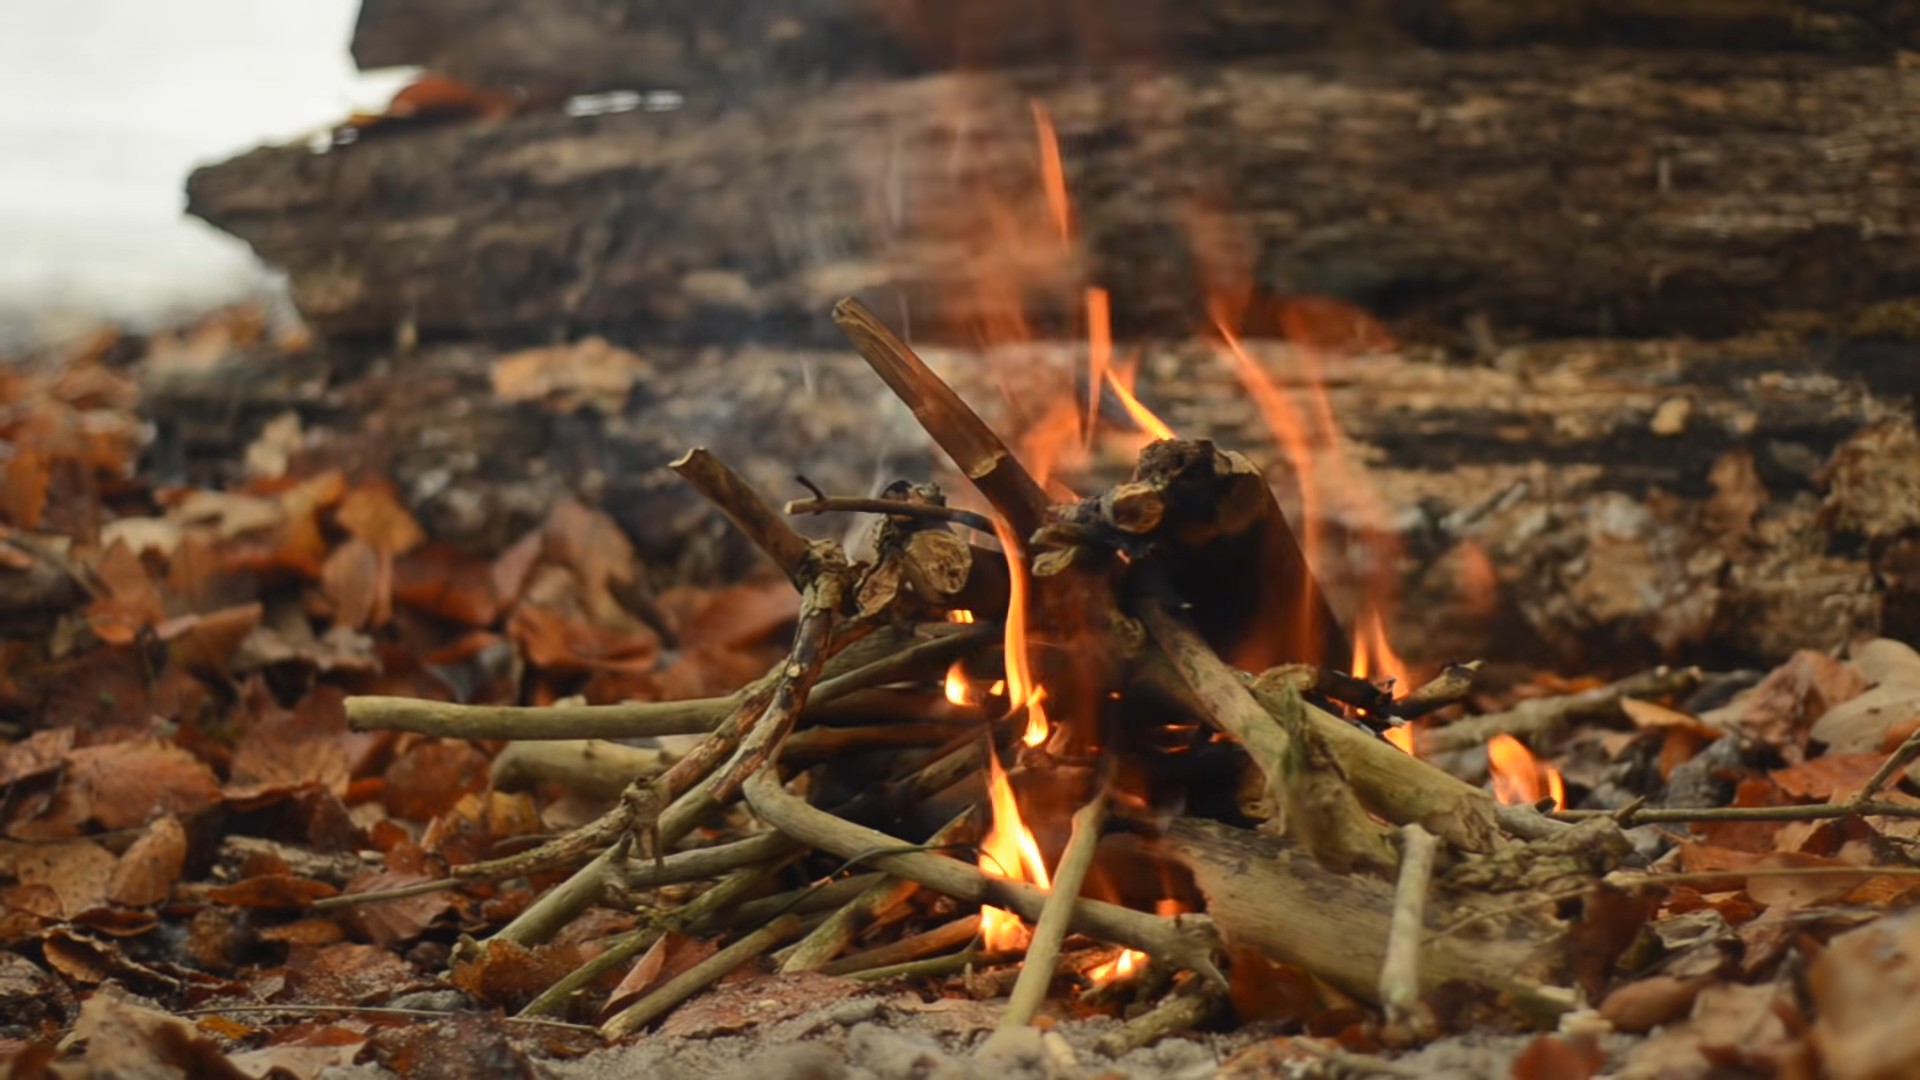 General 1920x1080 campfire fire nature fall